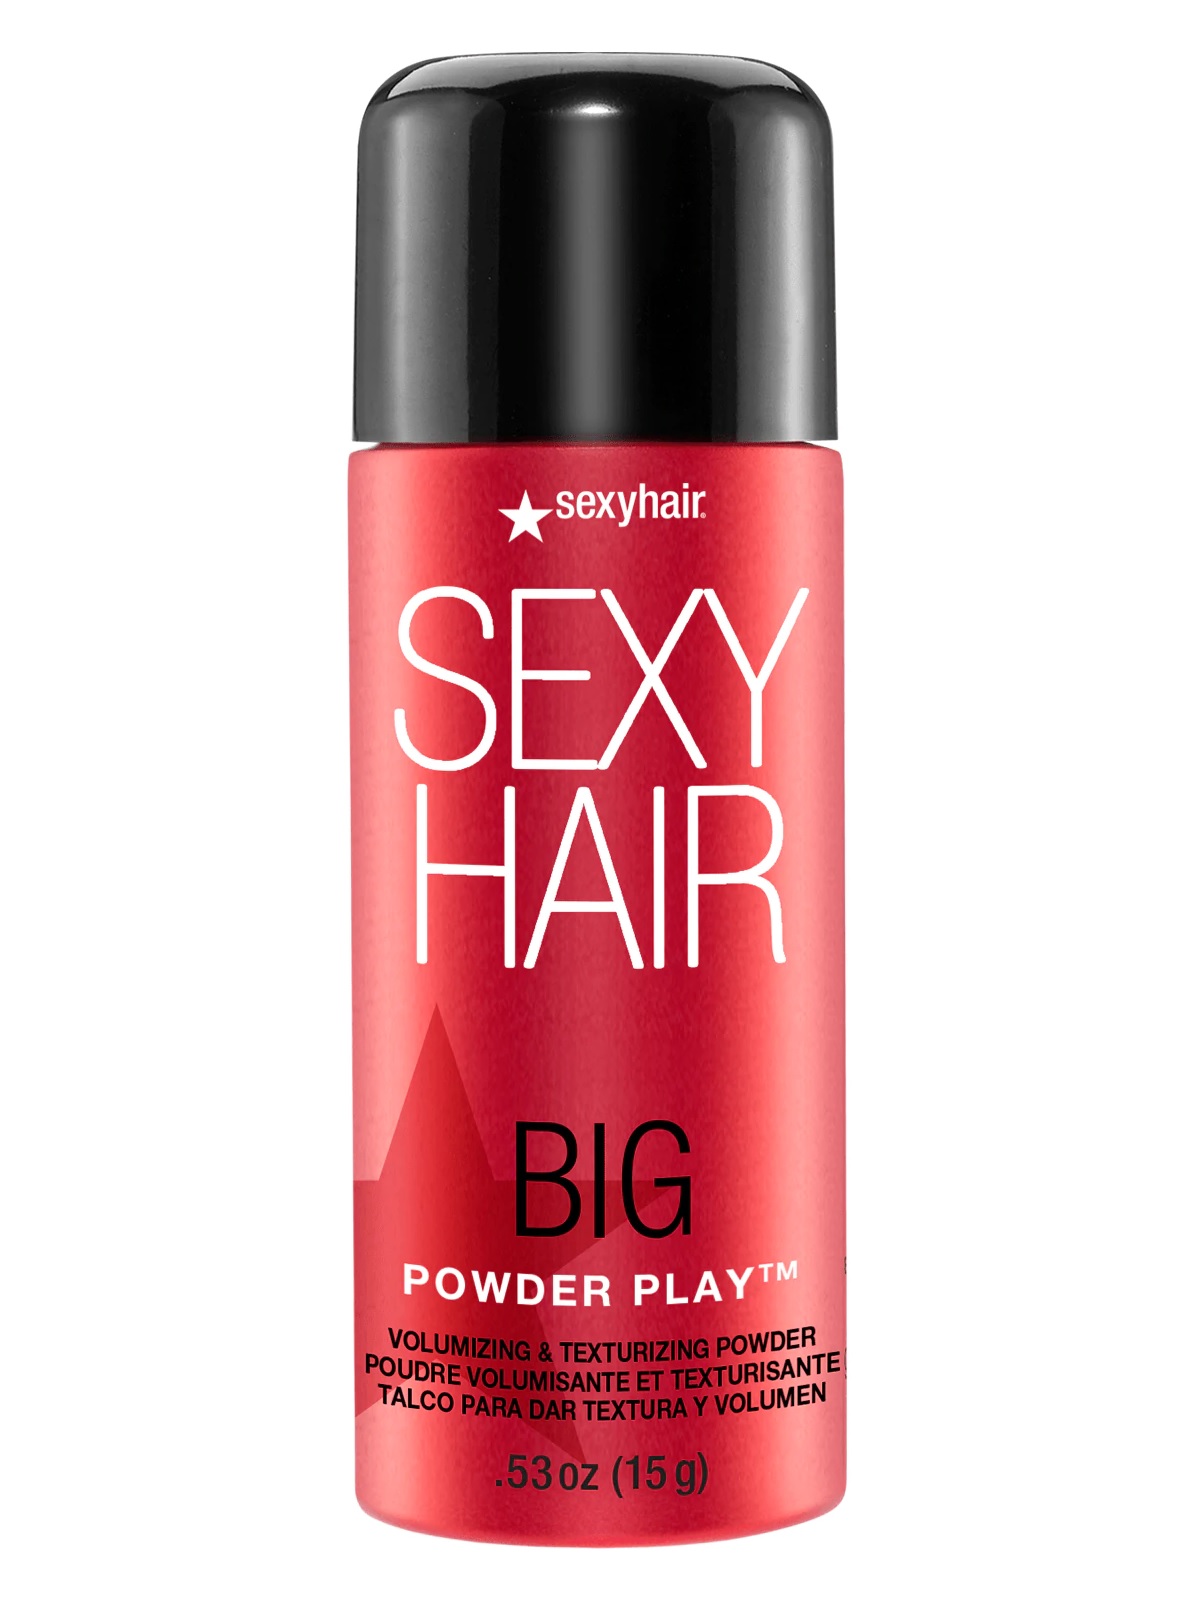 Sexy Hair Big Powder Play Volumizing and Texturizing Powder 15g